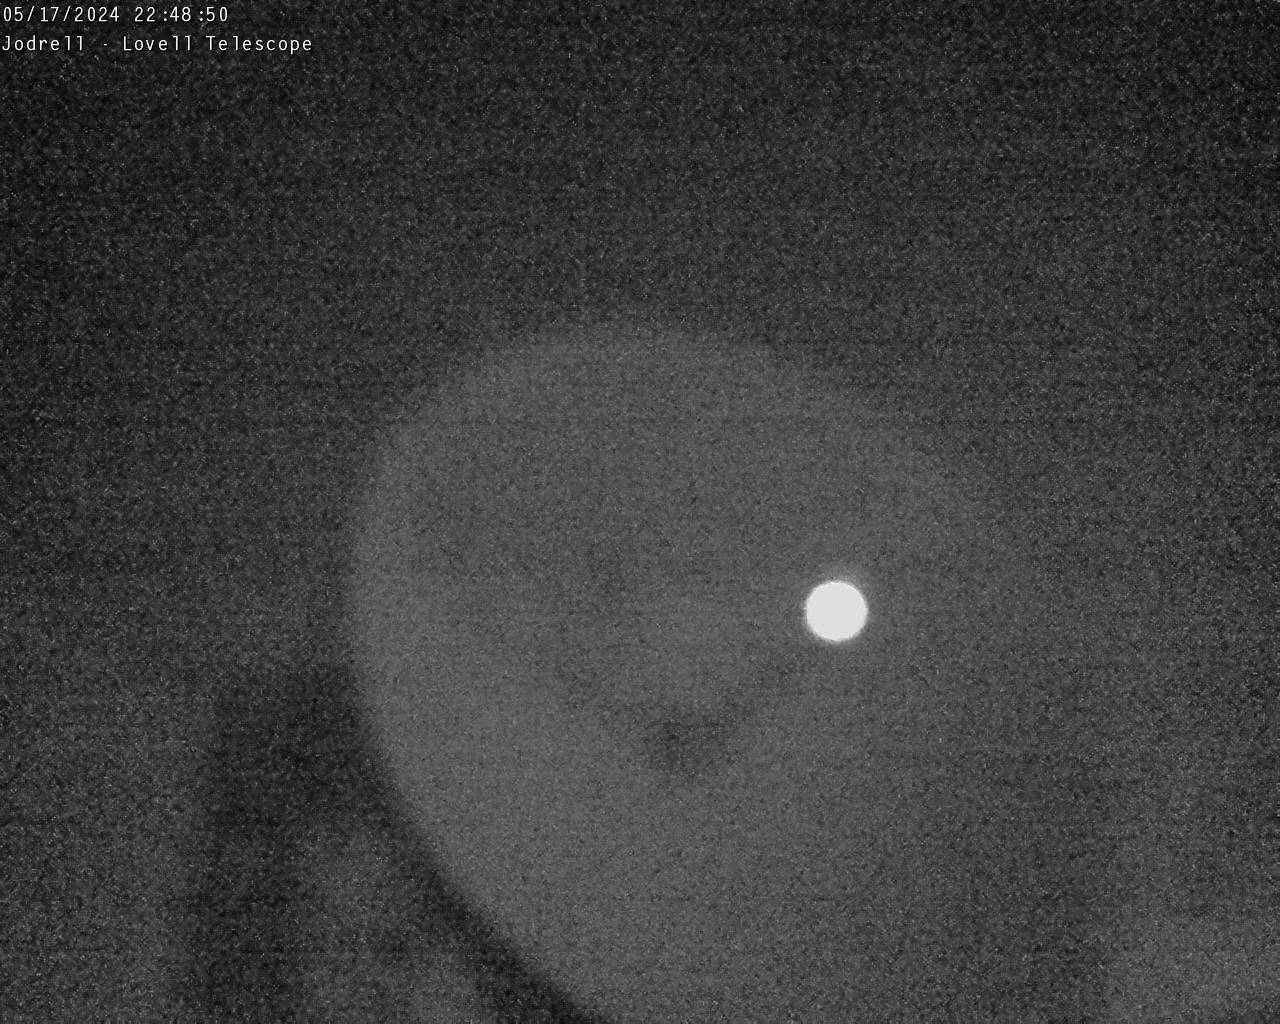 Observatoire de Jodrell Bank Ve. 22:49